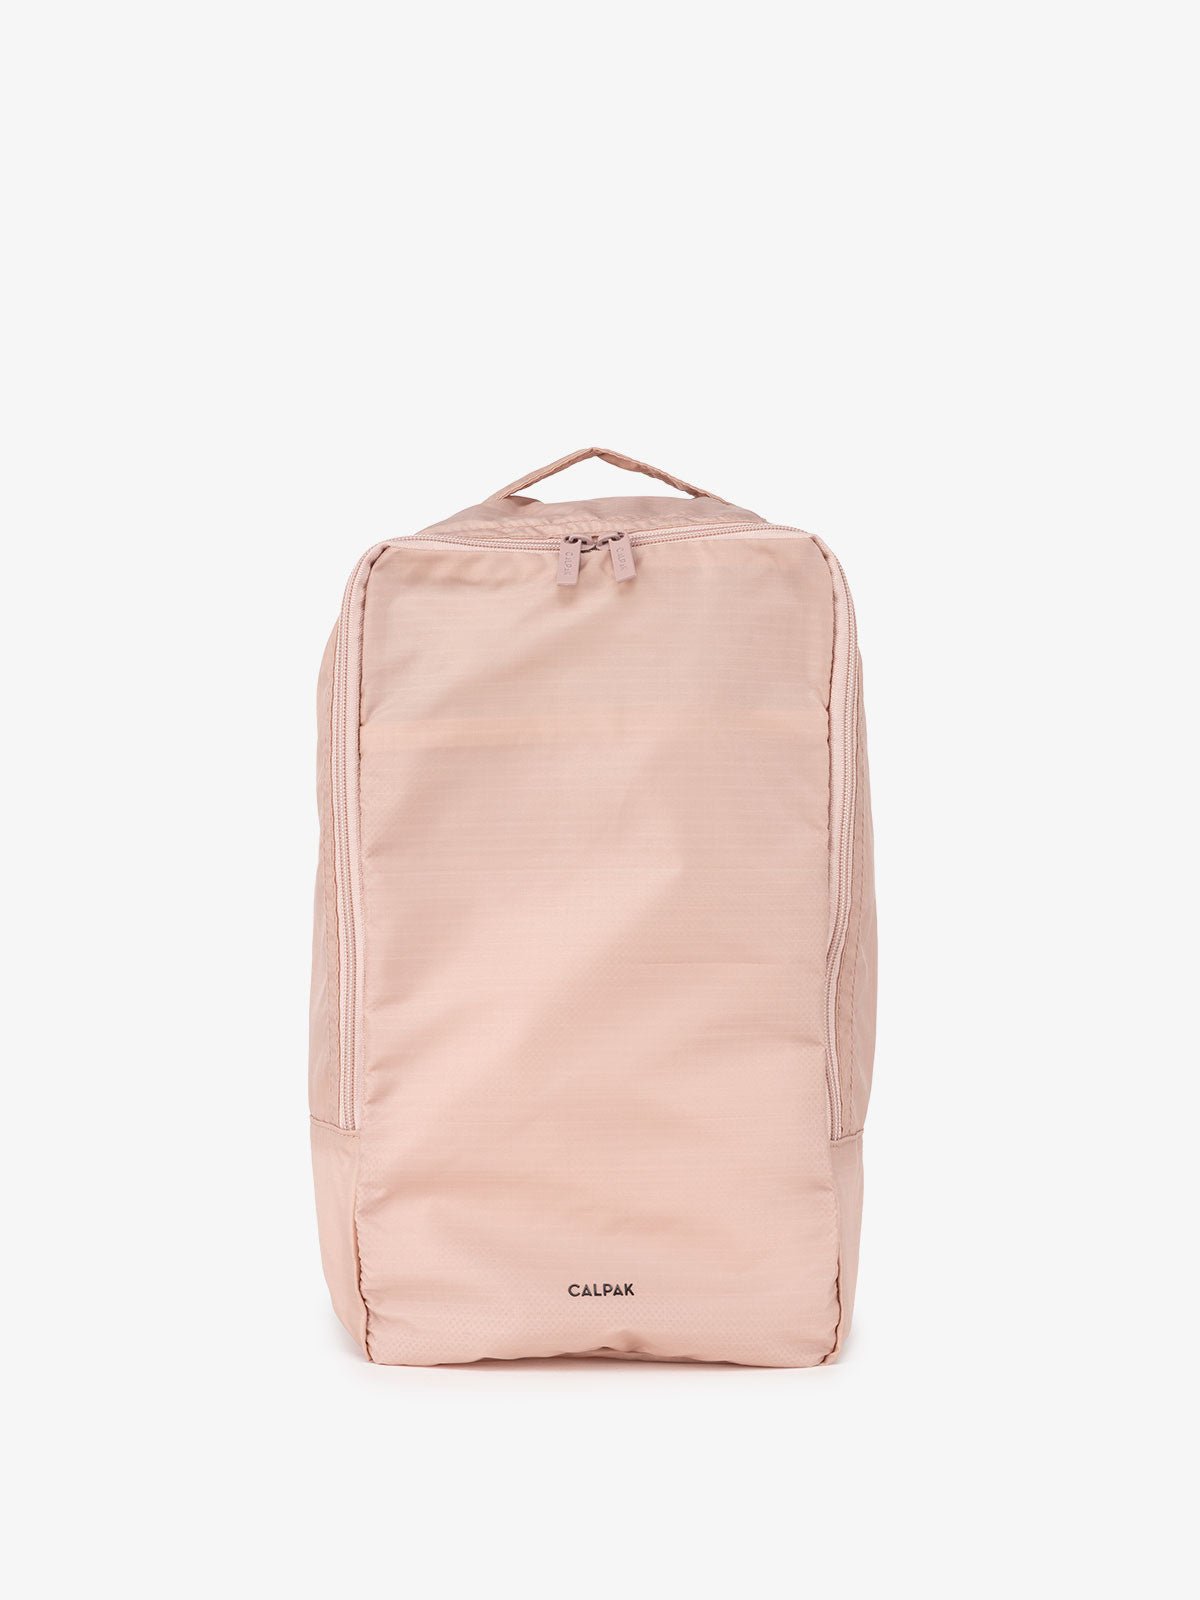 CALPAK shoe bag for travel in light pink mauve